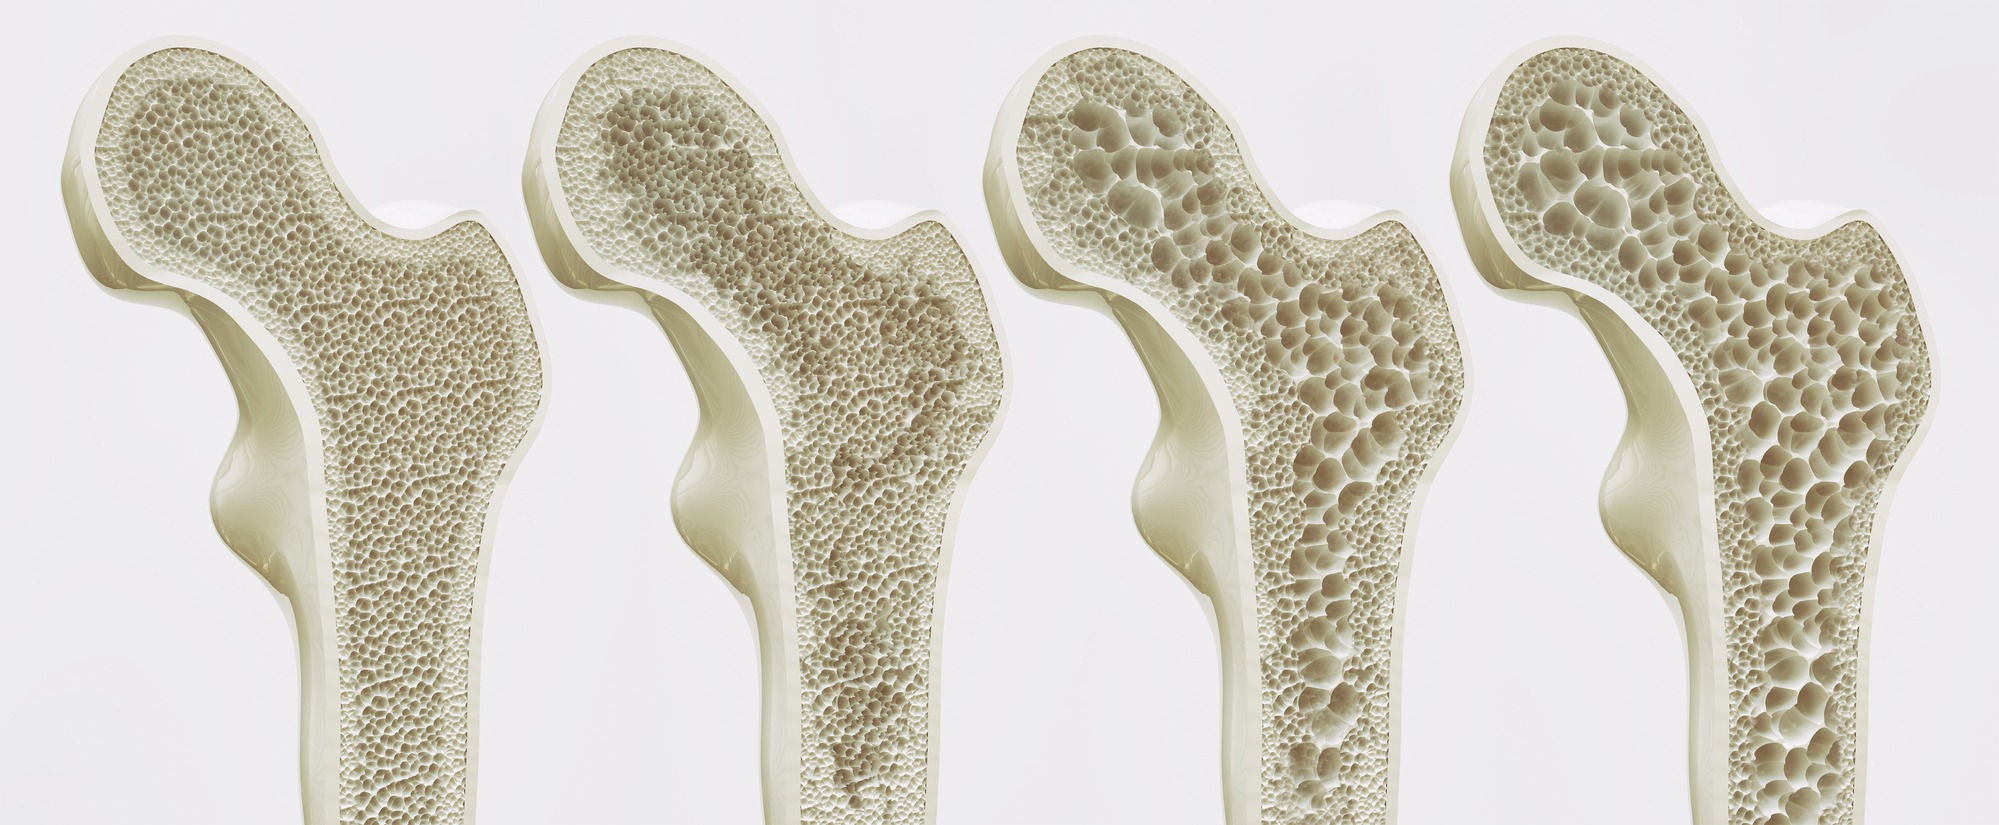 3D rendering of healthy bone density and osteoporosis